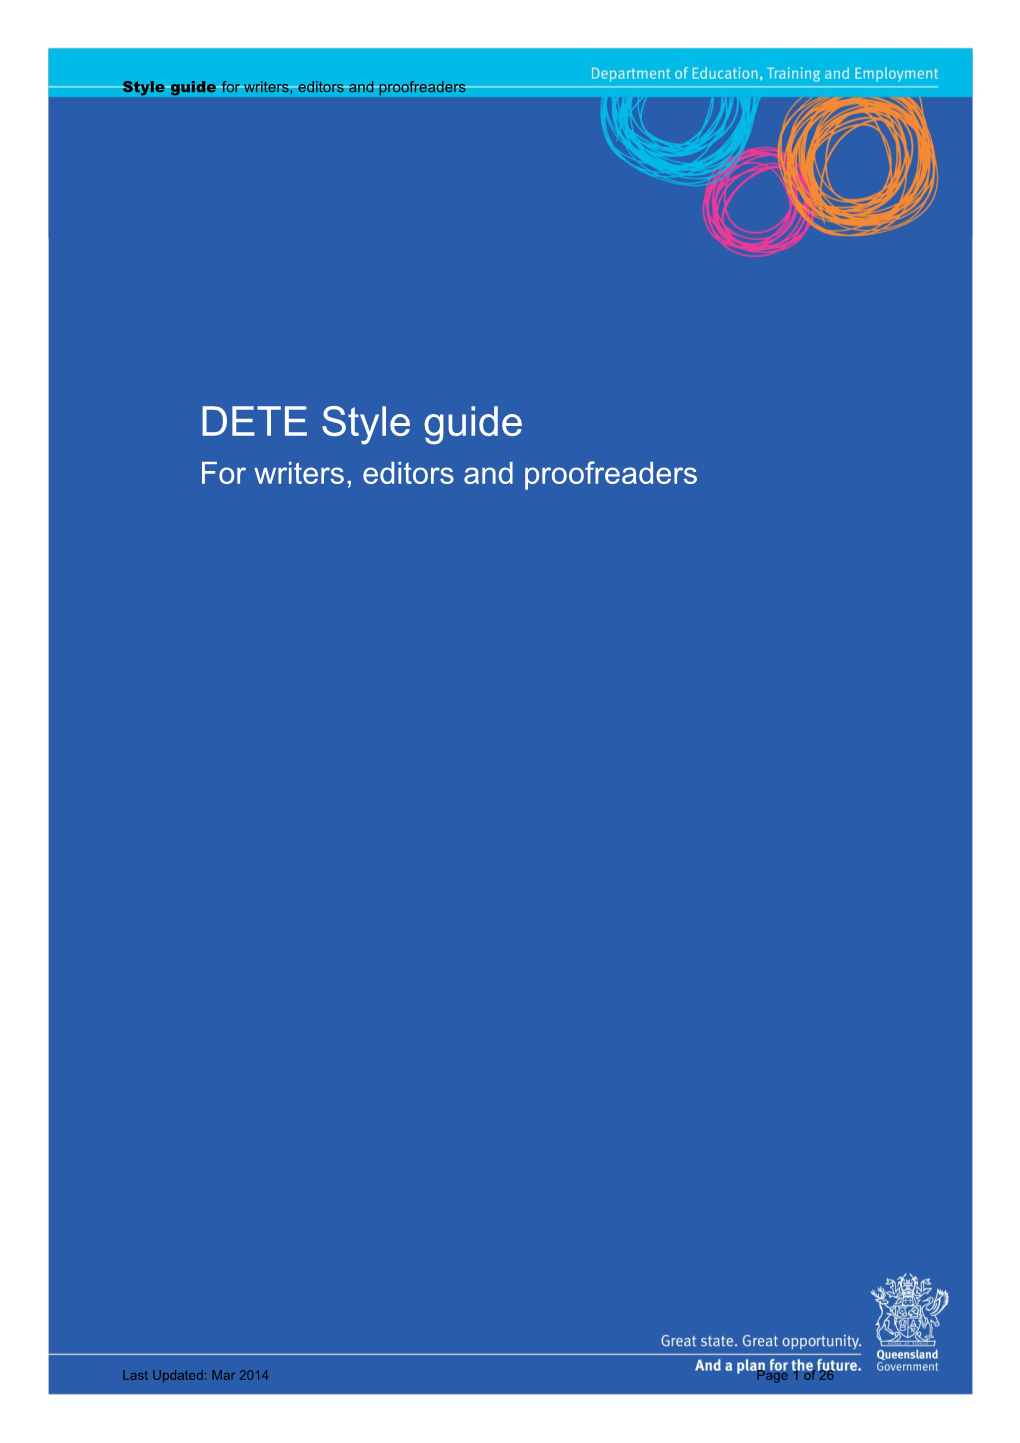 DETE Style Guide